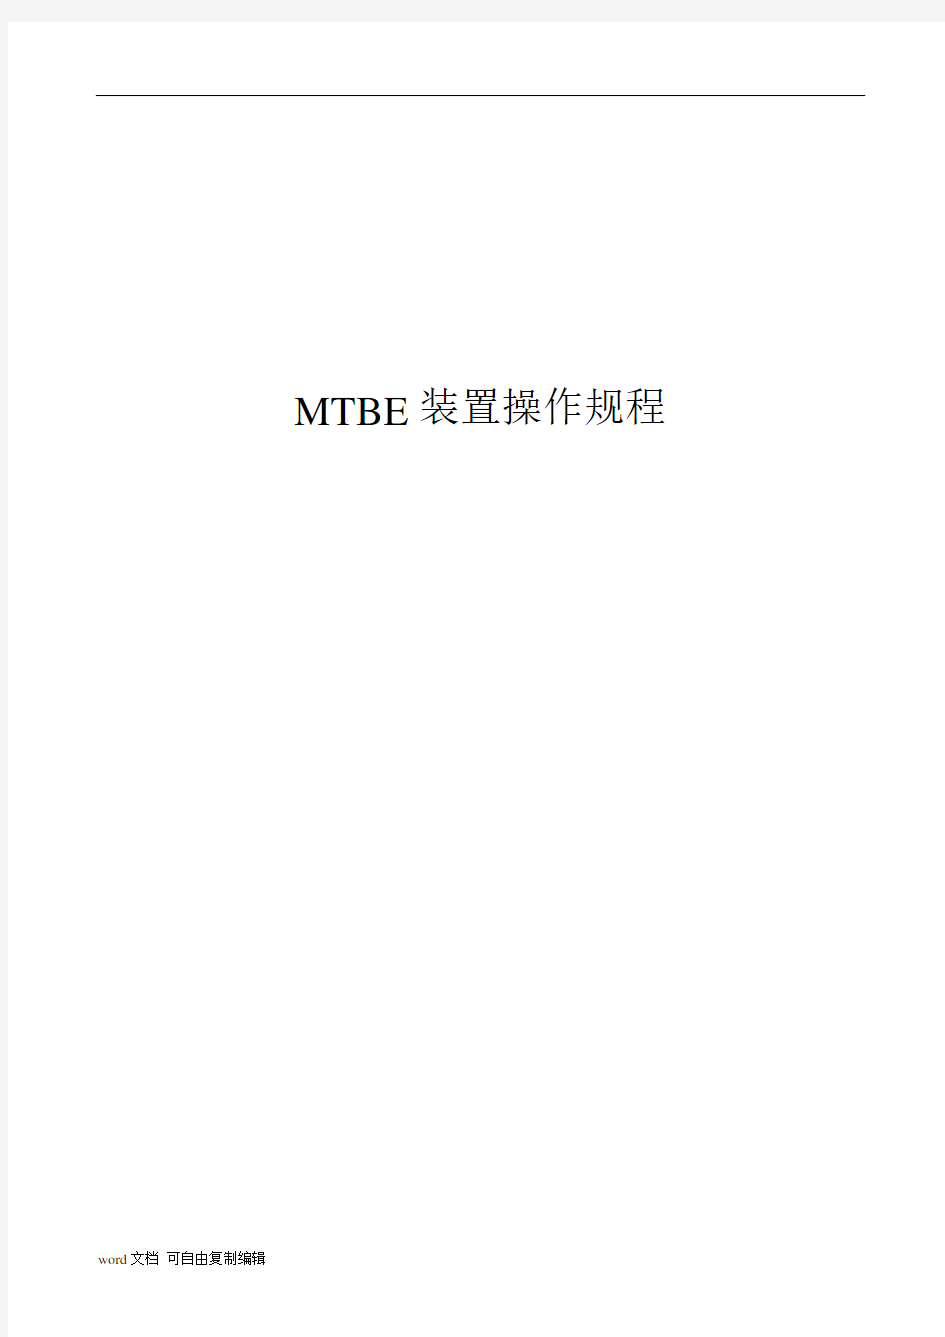 MTBE装置操作规程